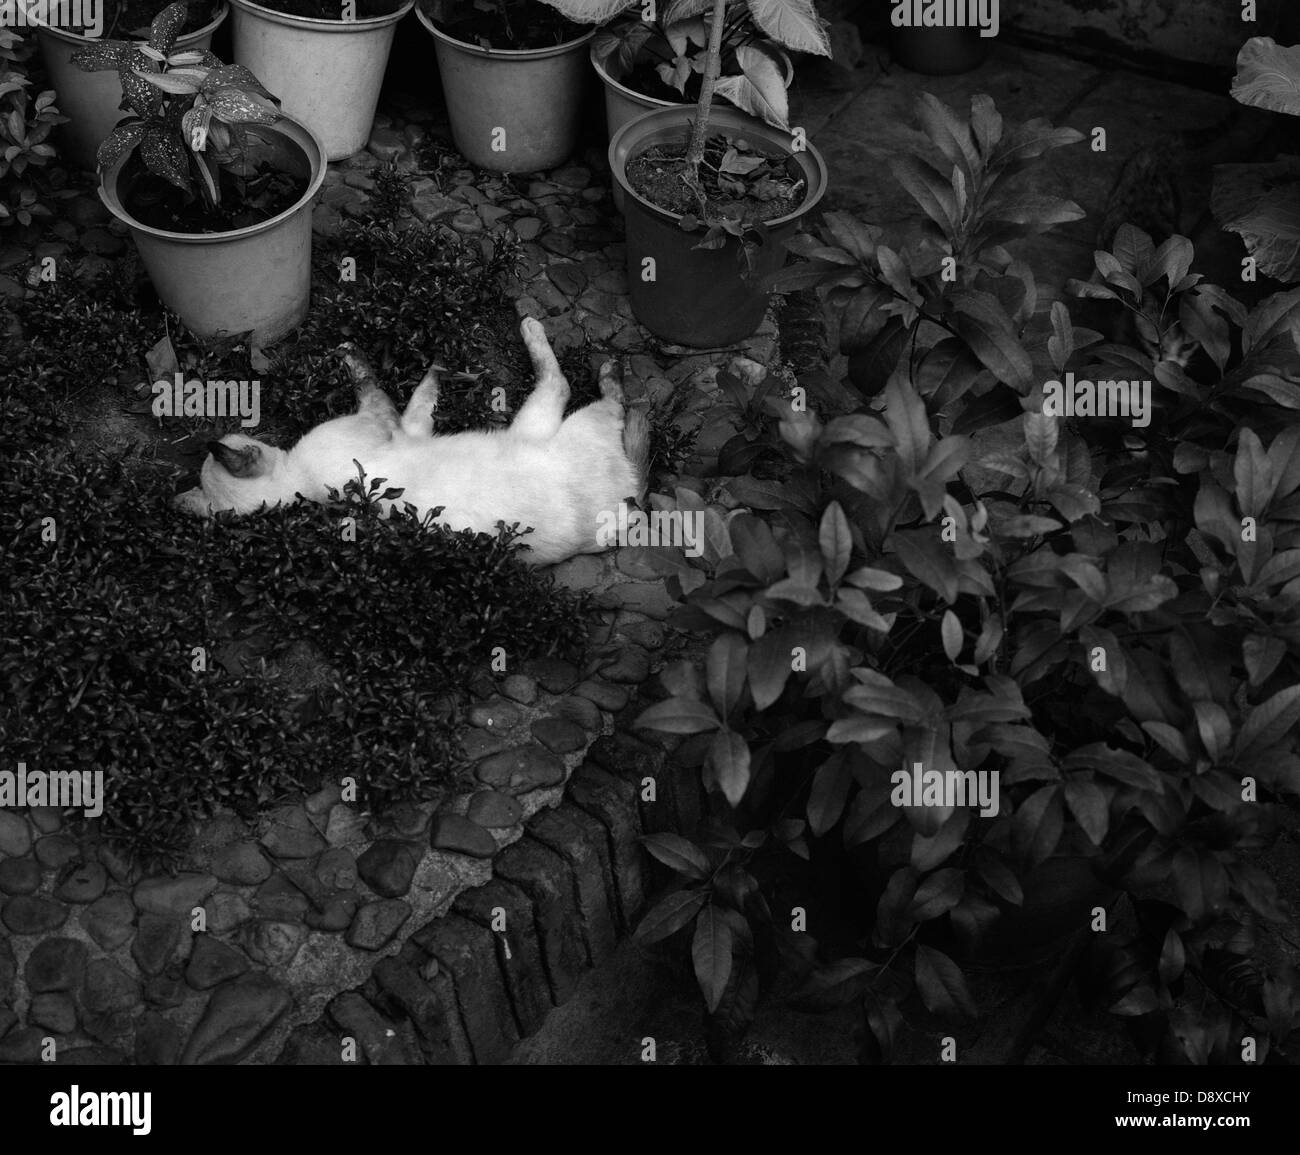 Cat sleeping in garden view (B&W) Banque D'Images